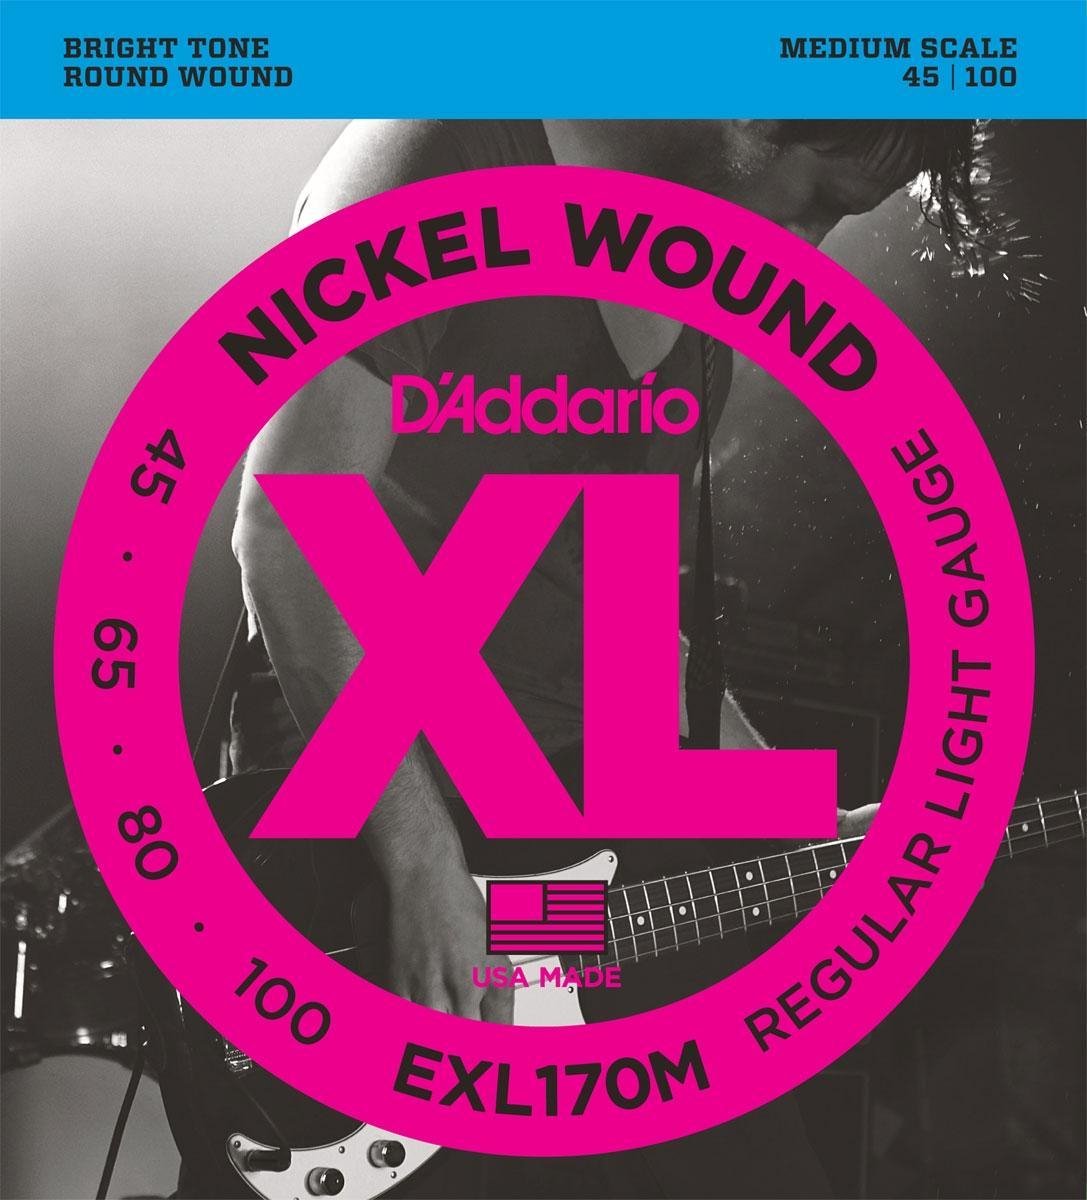 D'Addario 4er Bass XL Nickel 45-100 45-65-80-100, EXL170M - Snarenset voor 4-string basgitaar